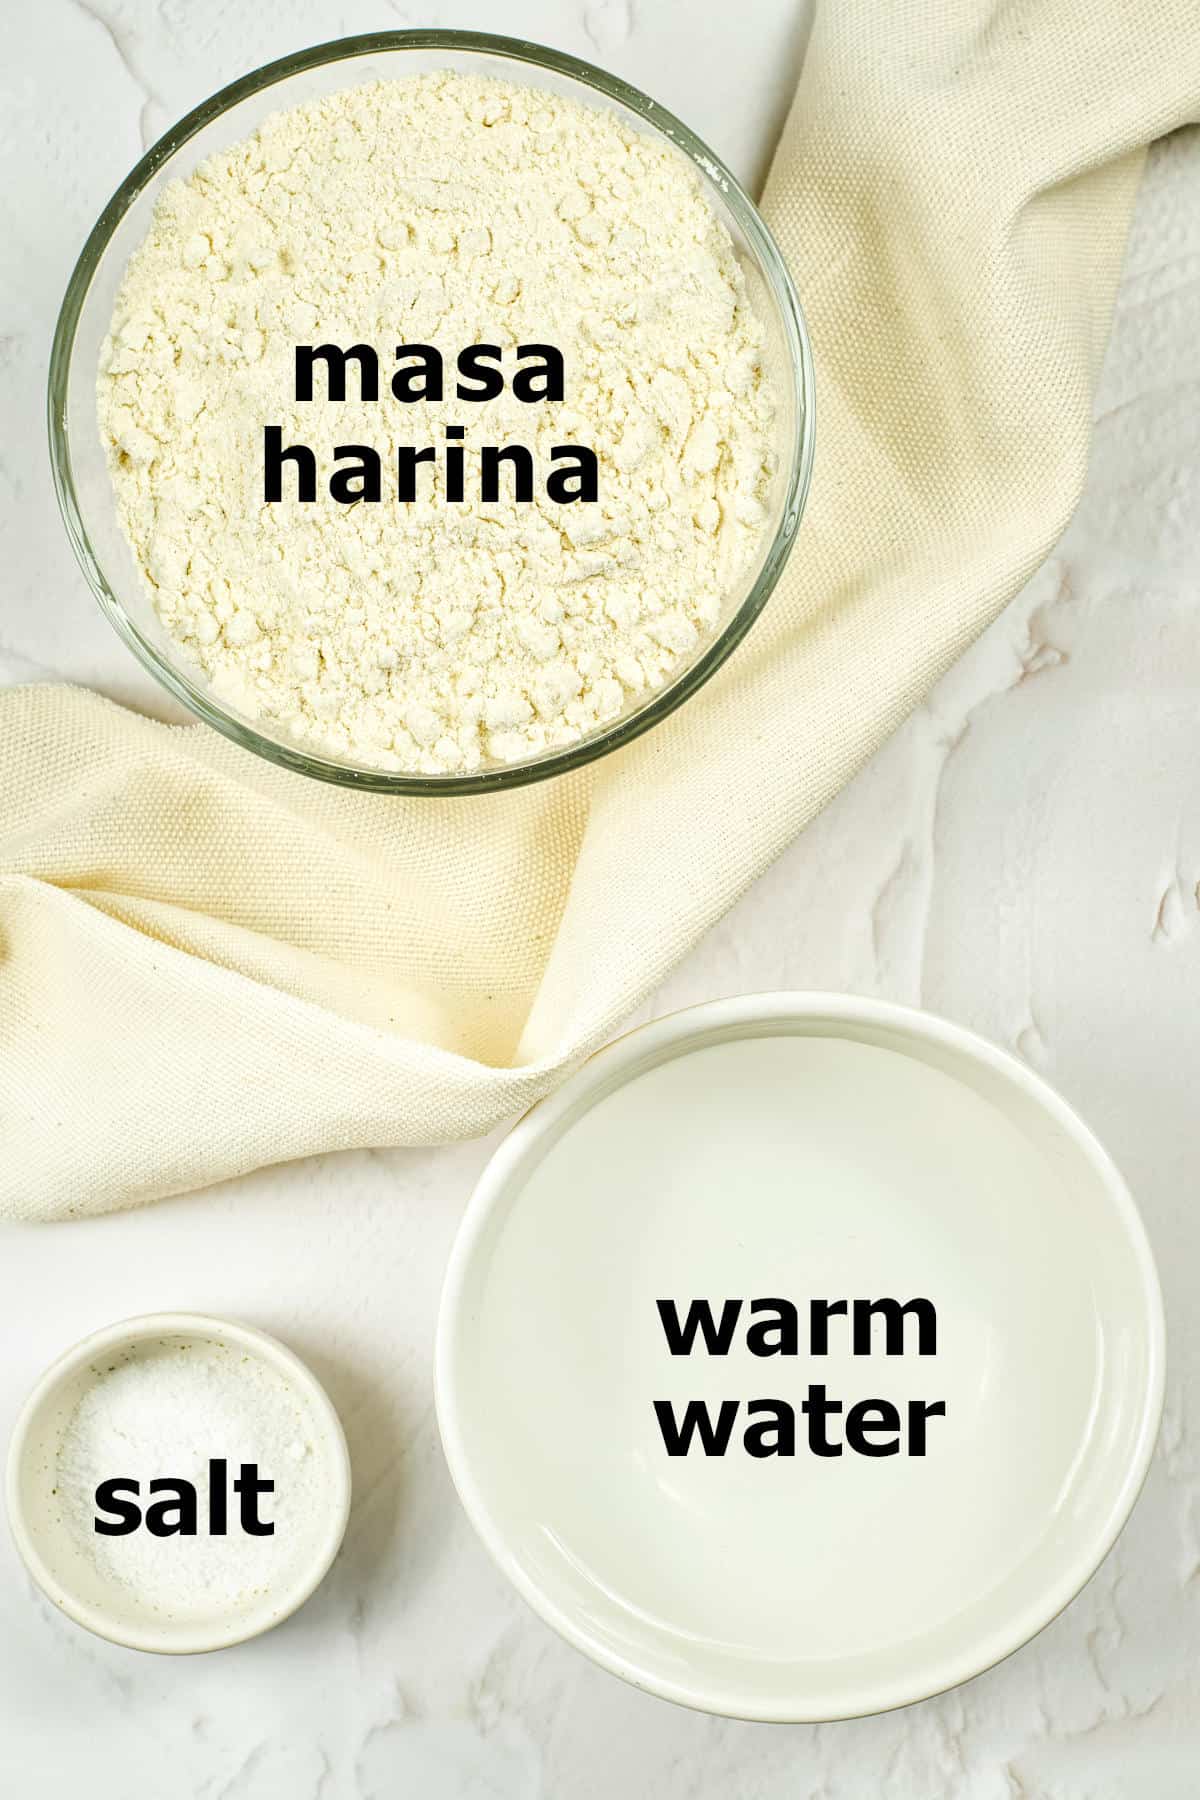 Ingredients for corn tortillas: masa harina, warm water, and salt.